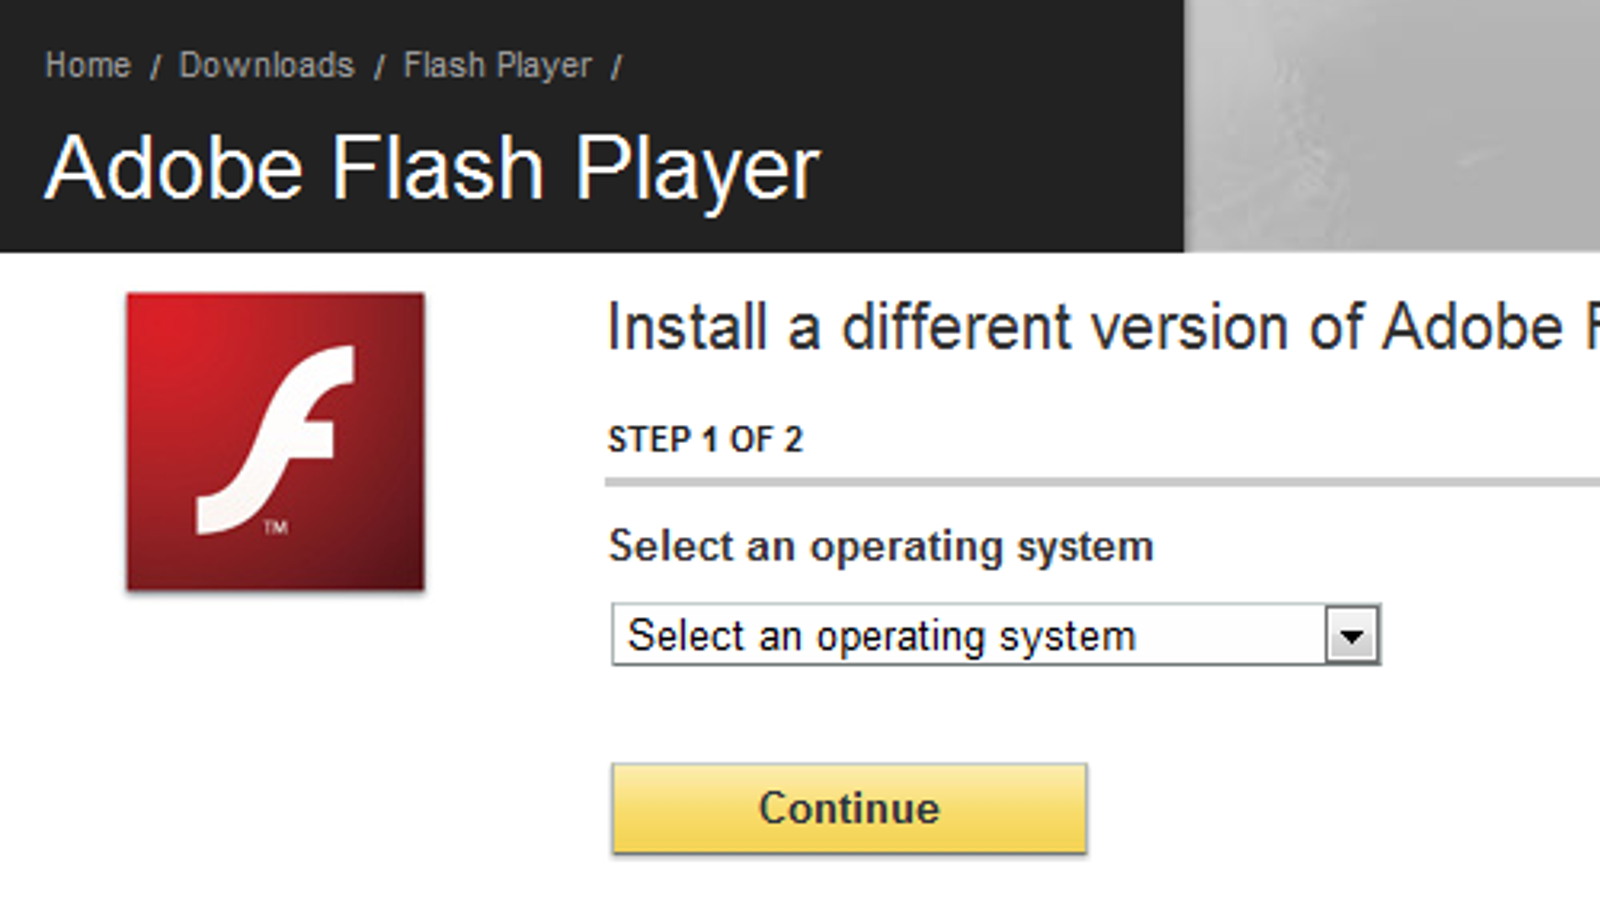 plugin adobe flash player 10.1